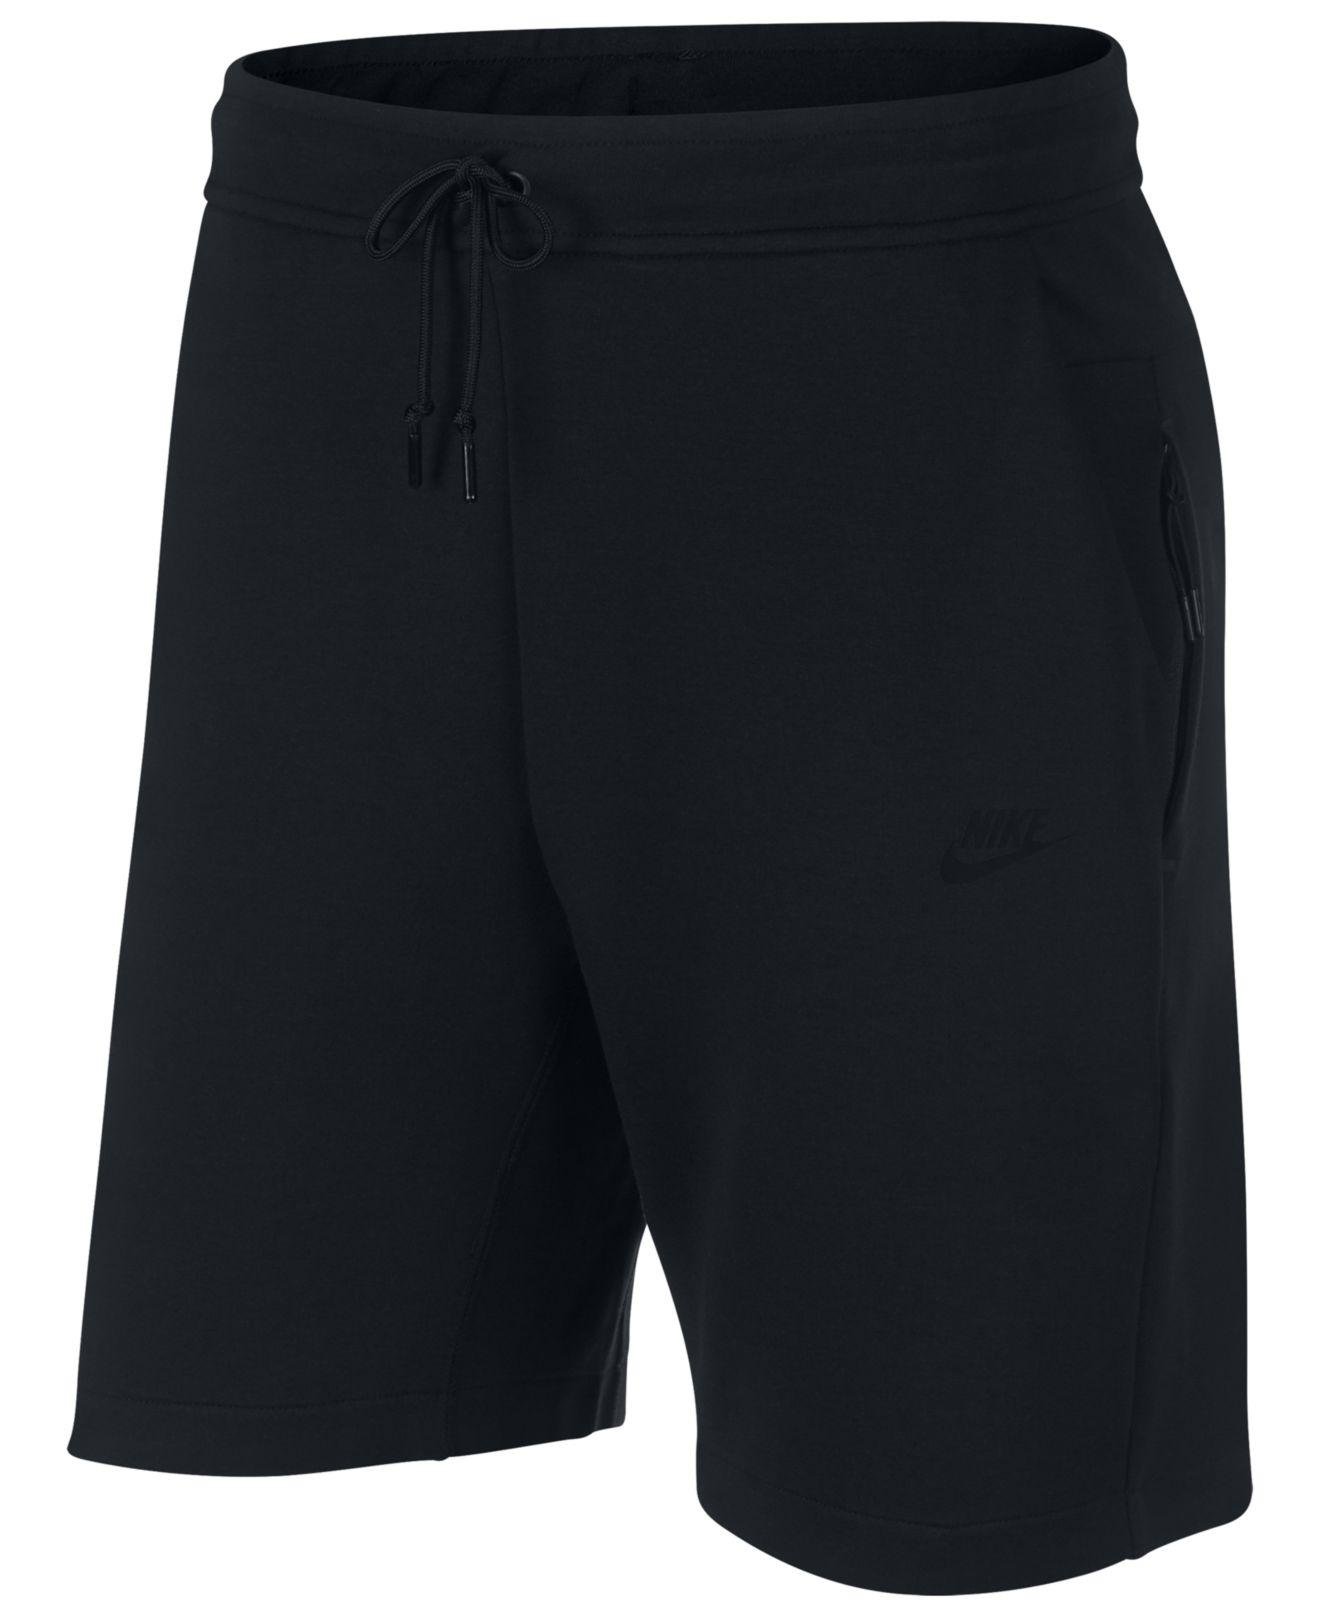 Nike Tech Fleece Shorts in Black/Black (Black) for Men - Save 13% - Lyst